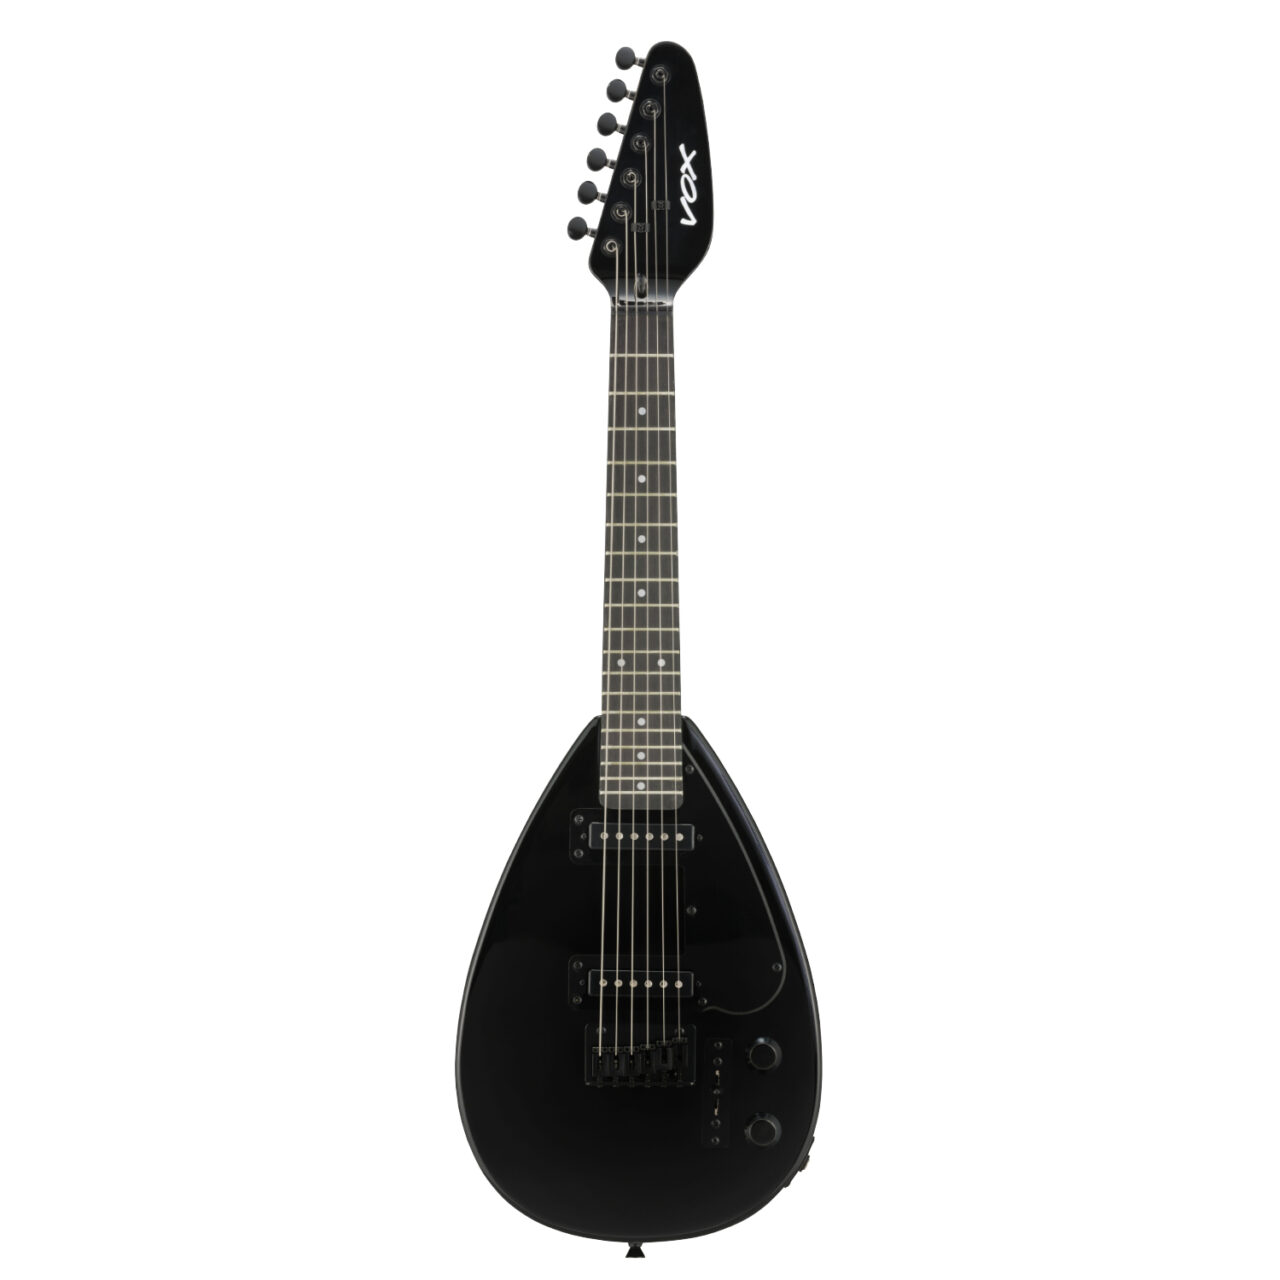 VOX MK3 MINI SLBK Solid Black ミニエレキギター ソリッドブラック